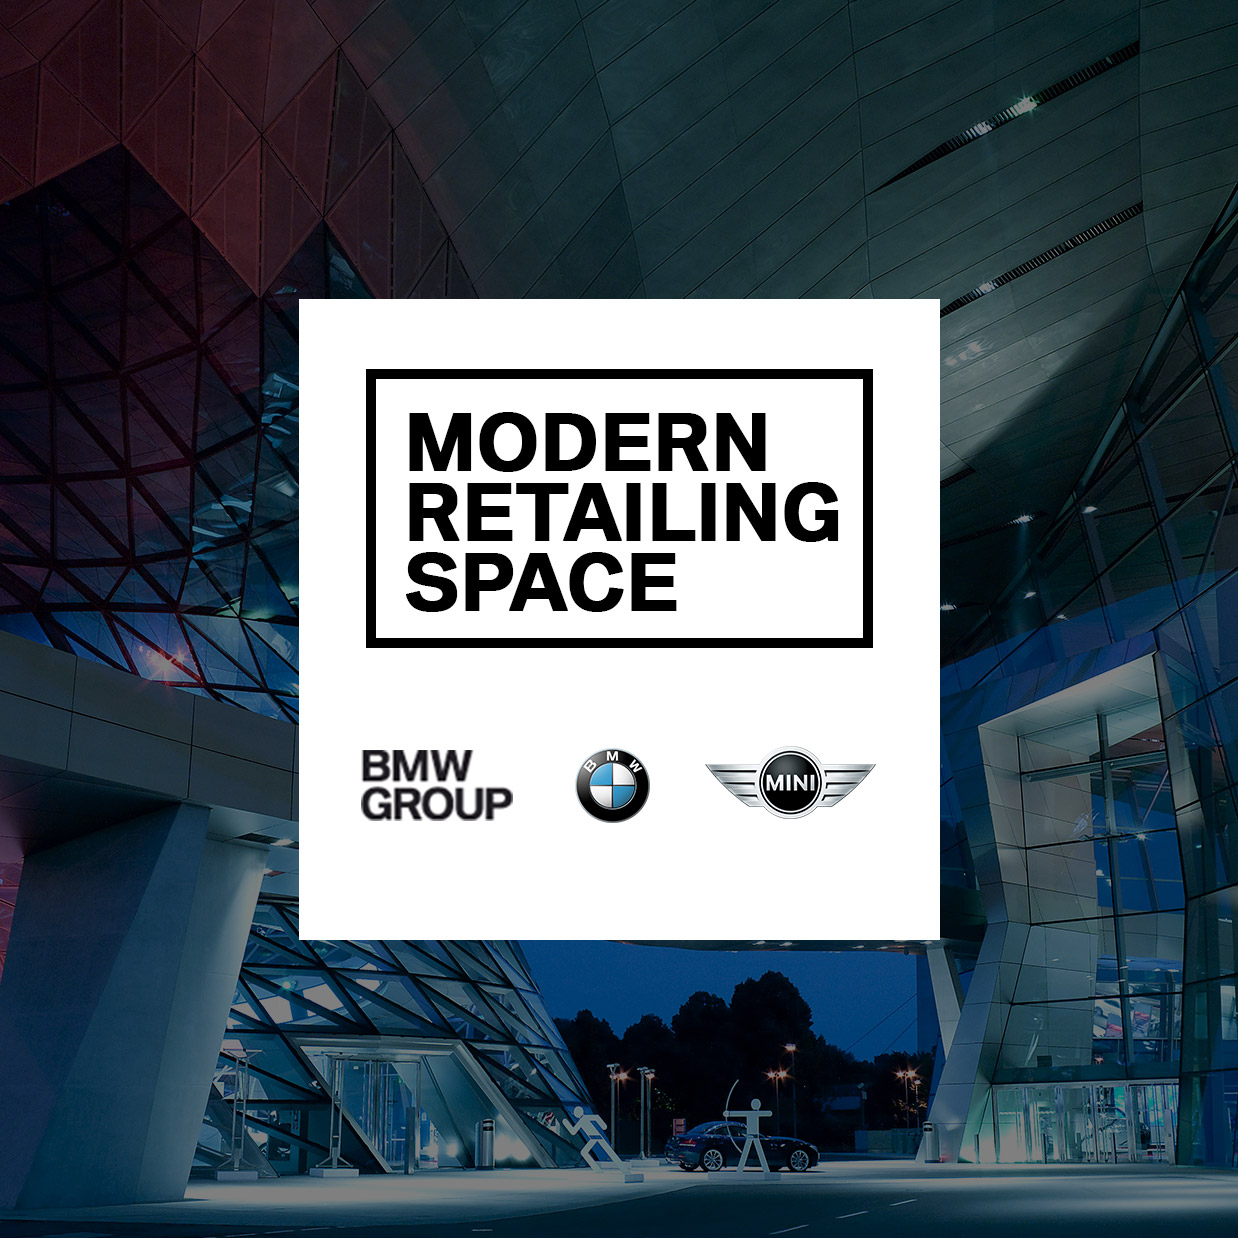 BMW – MODERN RETAIL SPACE